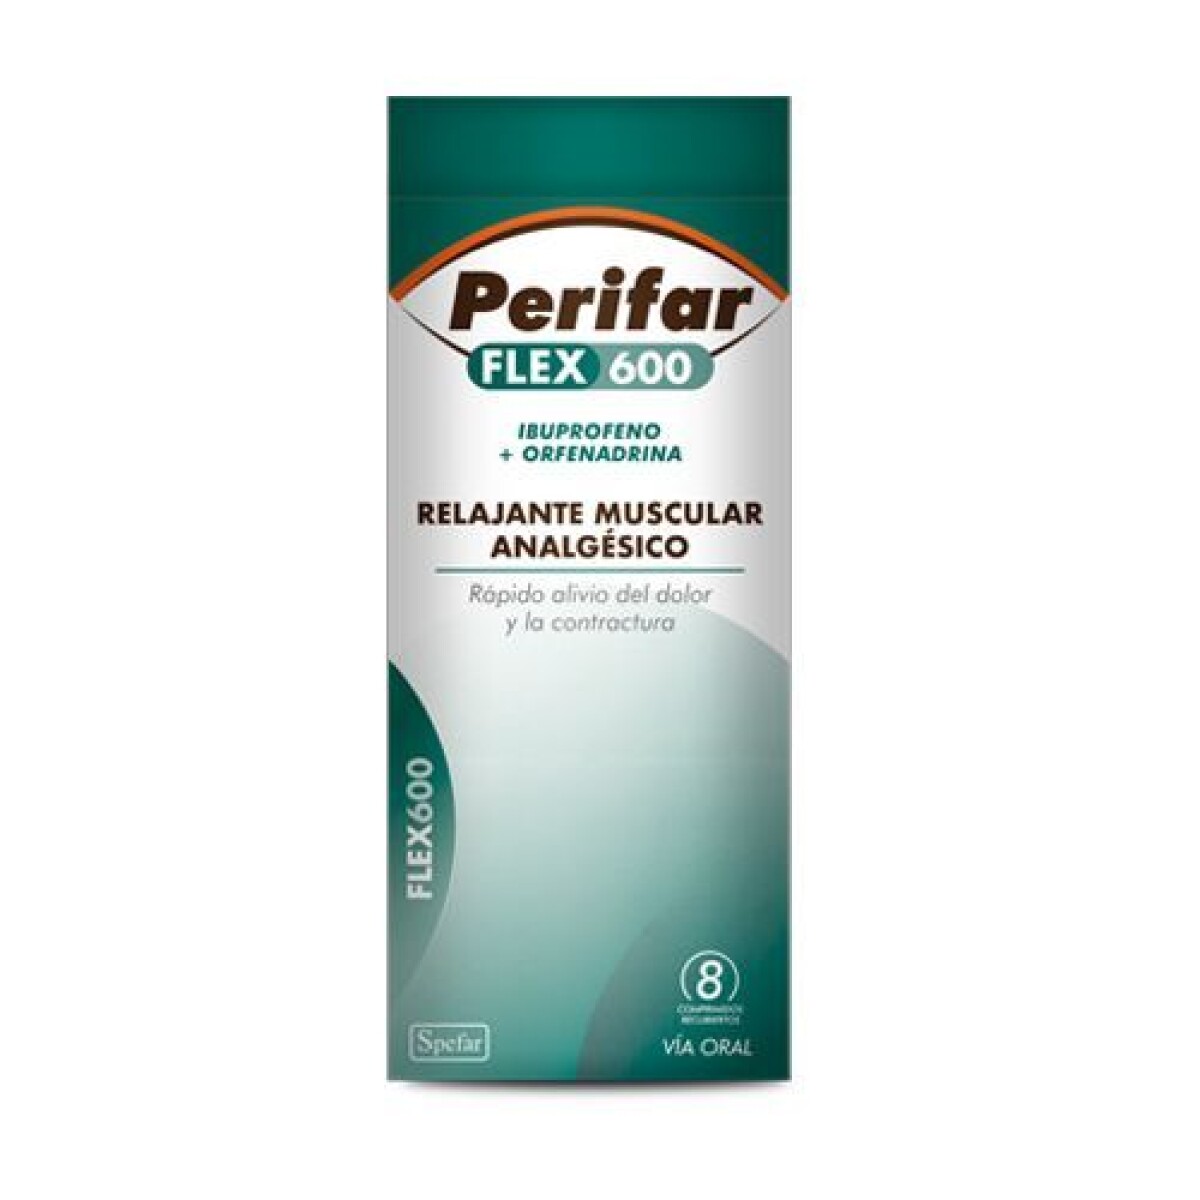 Perifar-Flex 